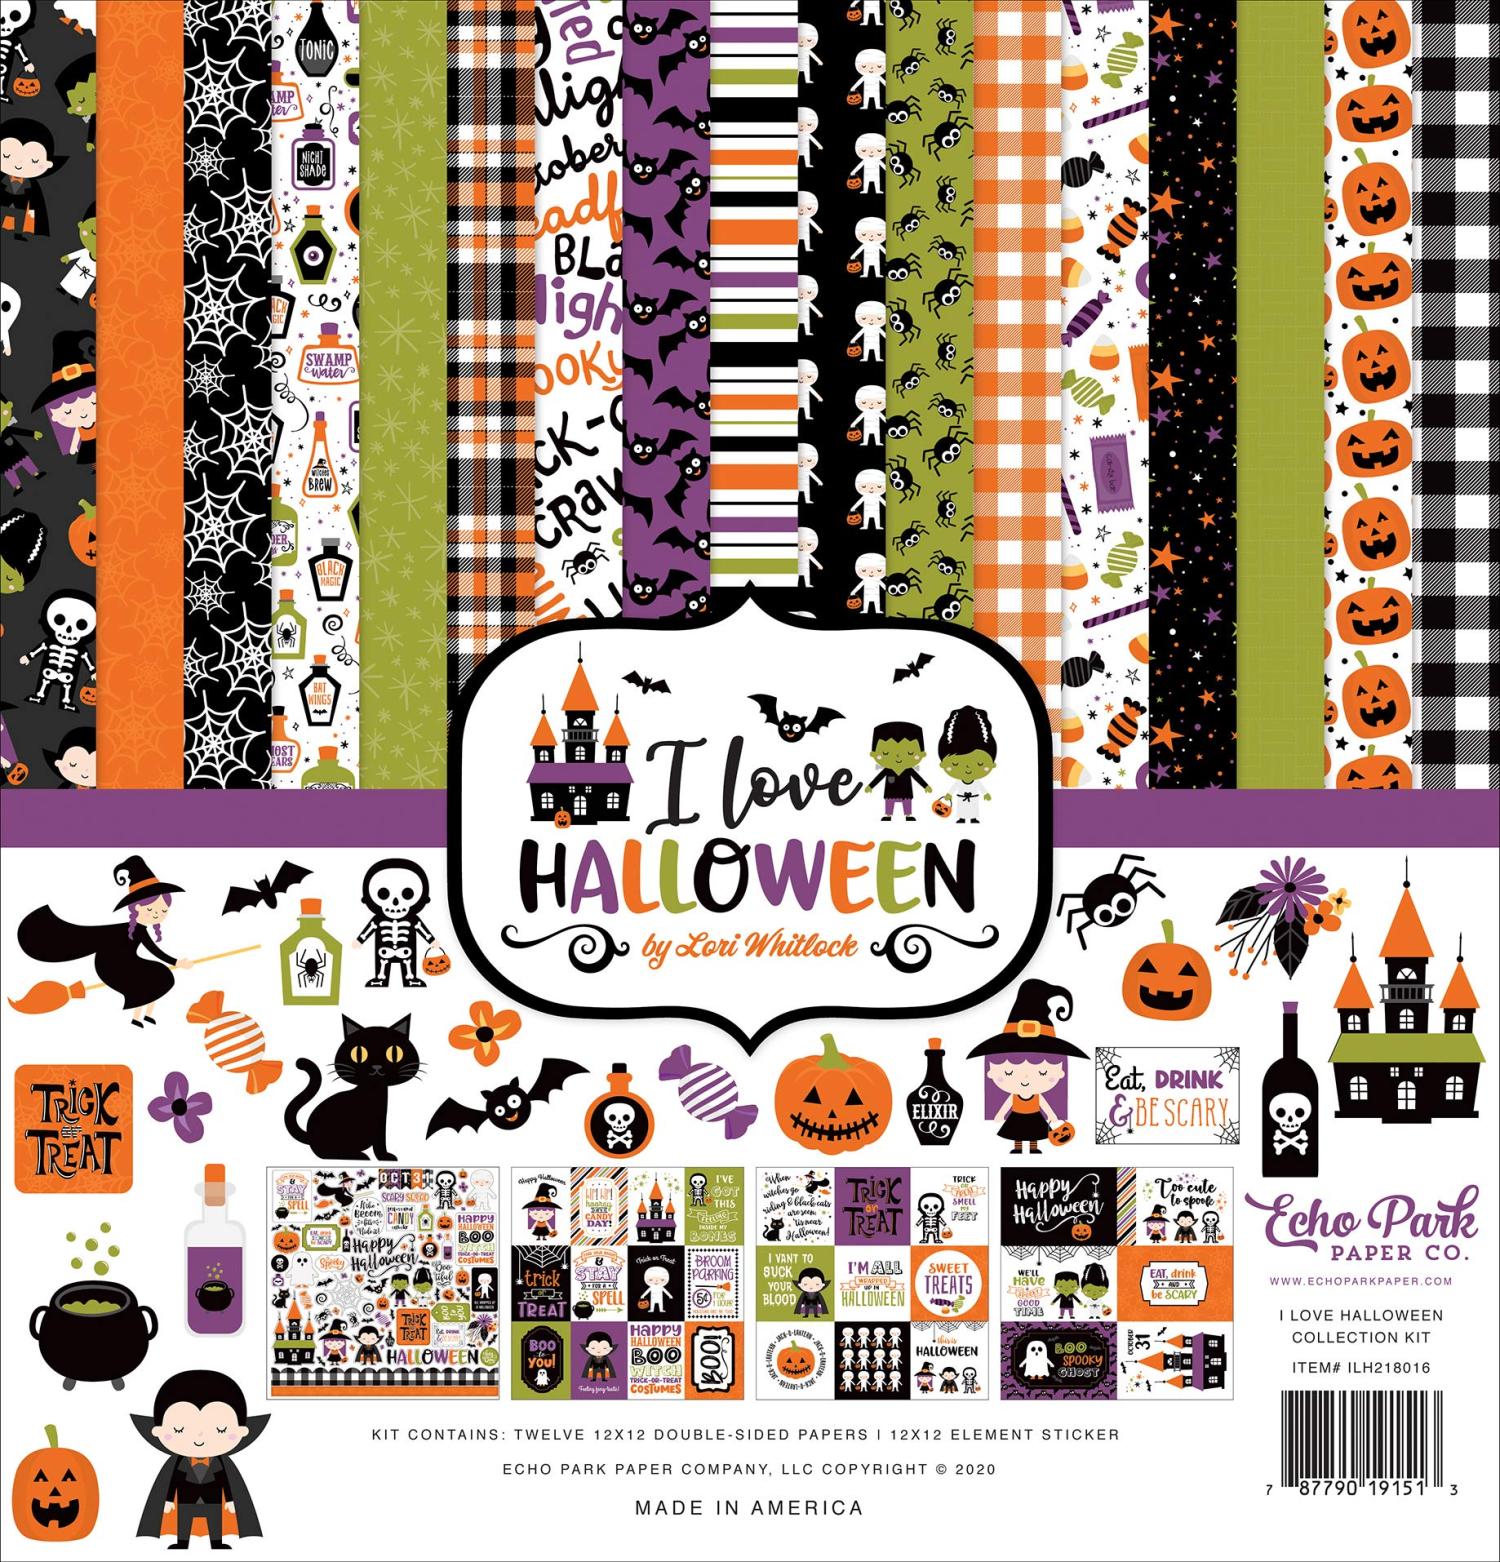 Echo Park Paper Company Love Halloween Collection Kit, Orange